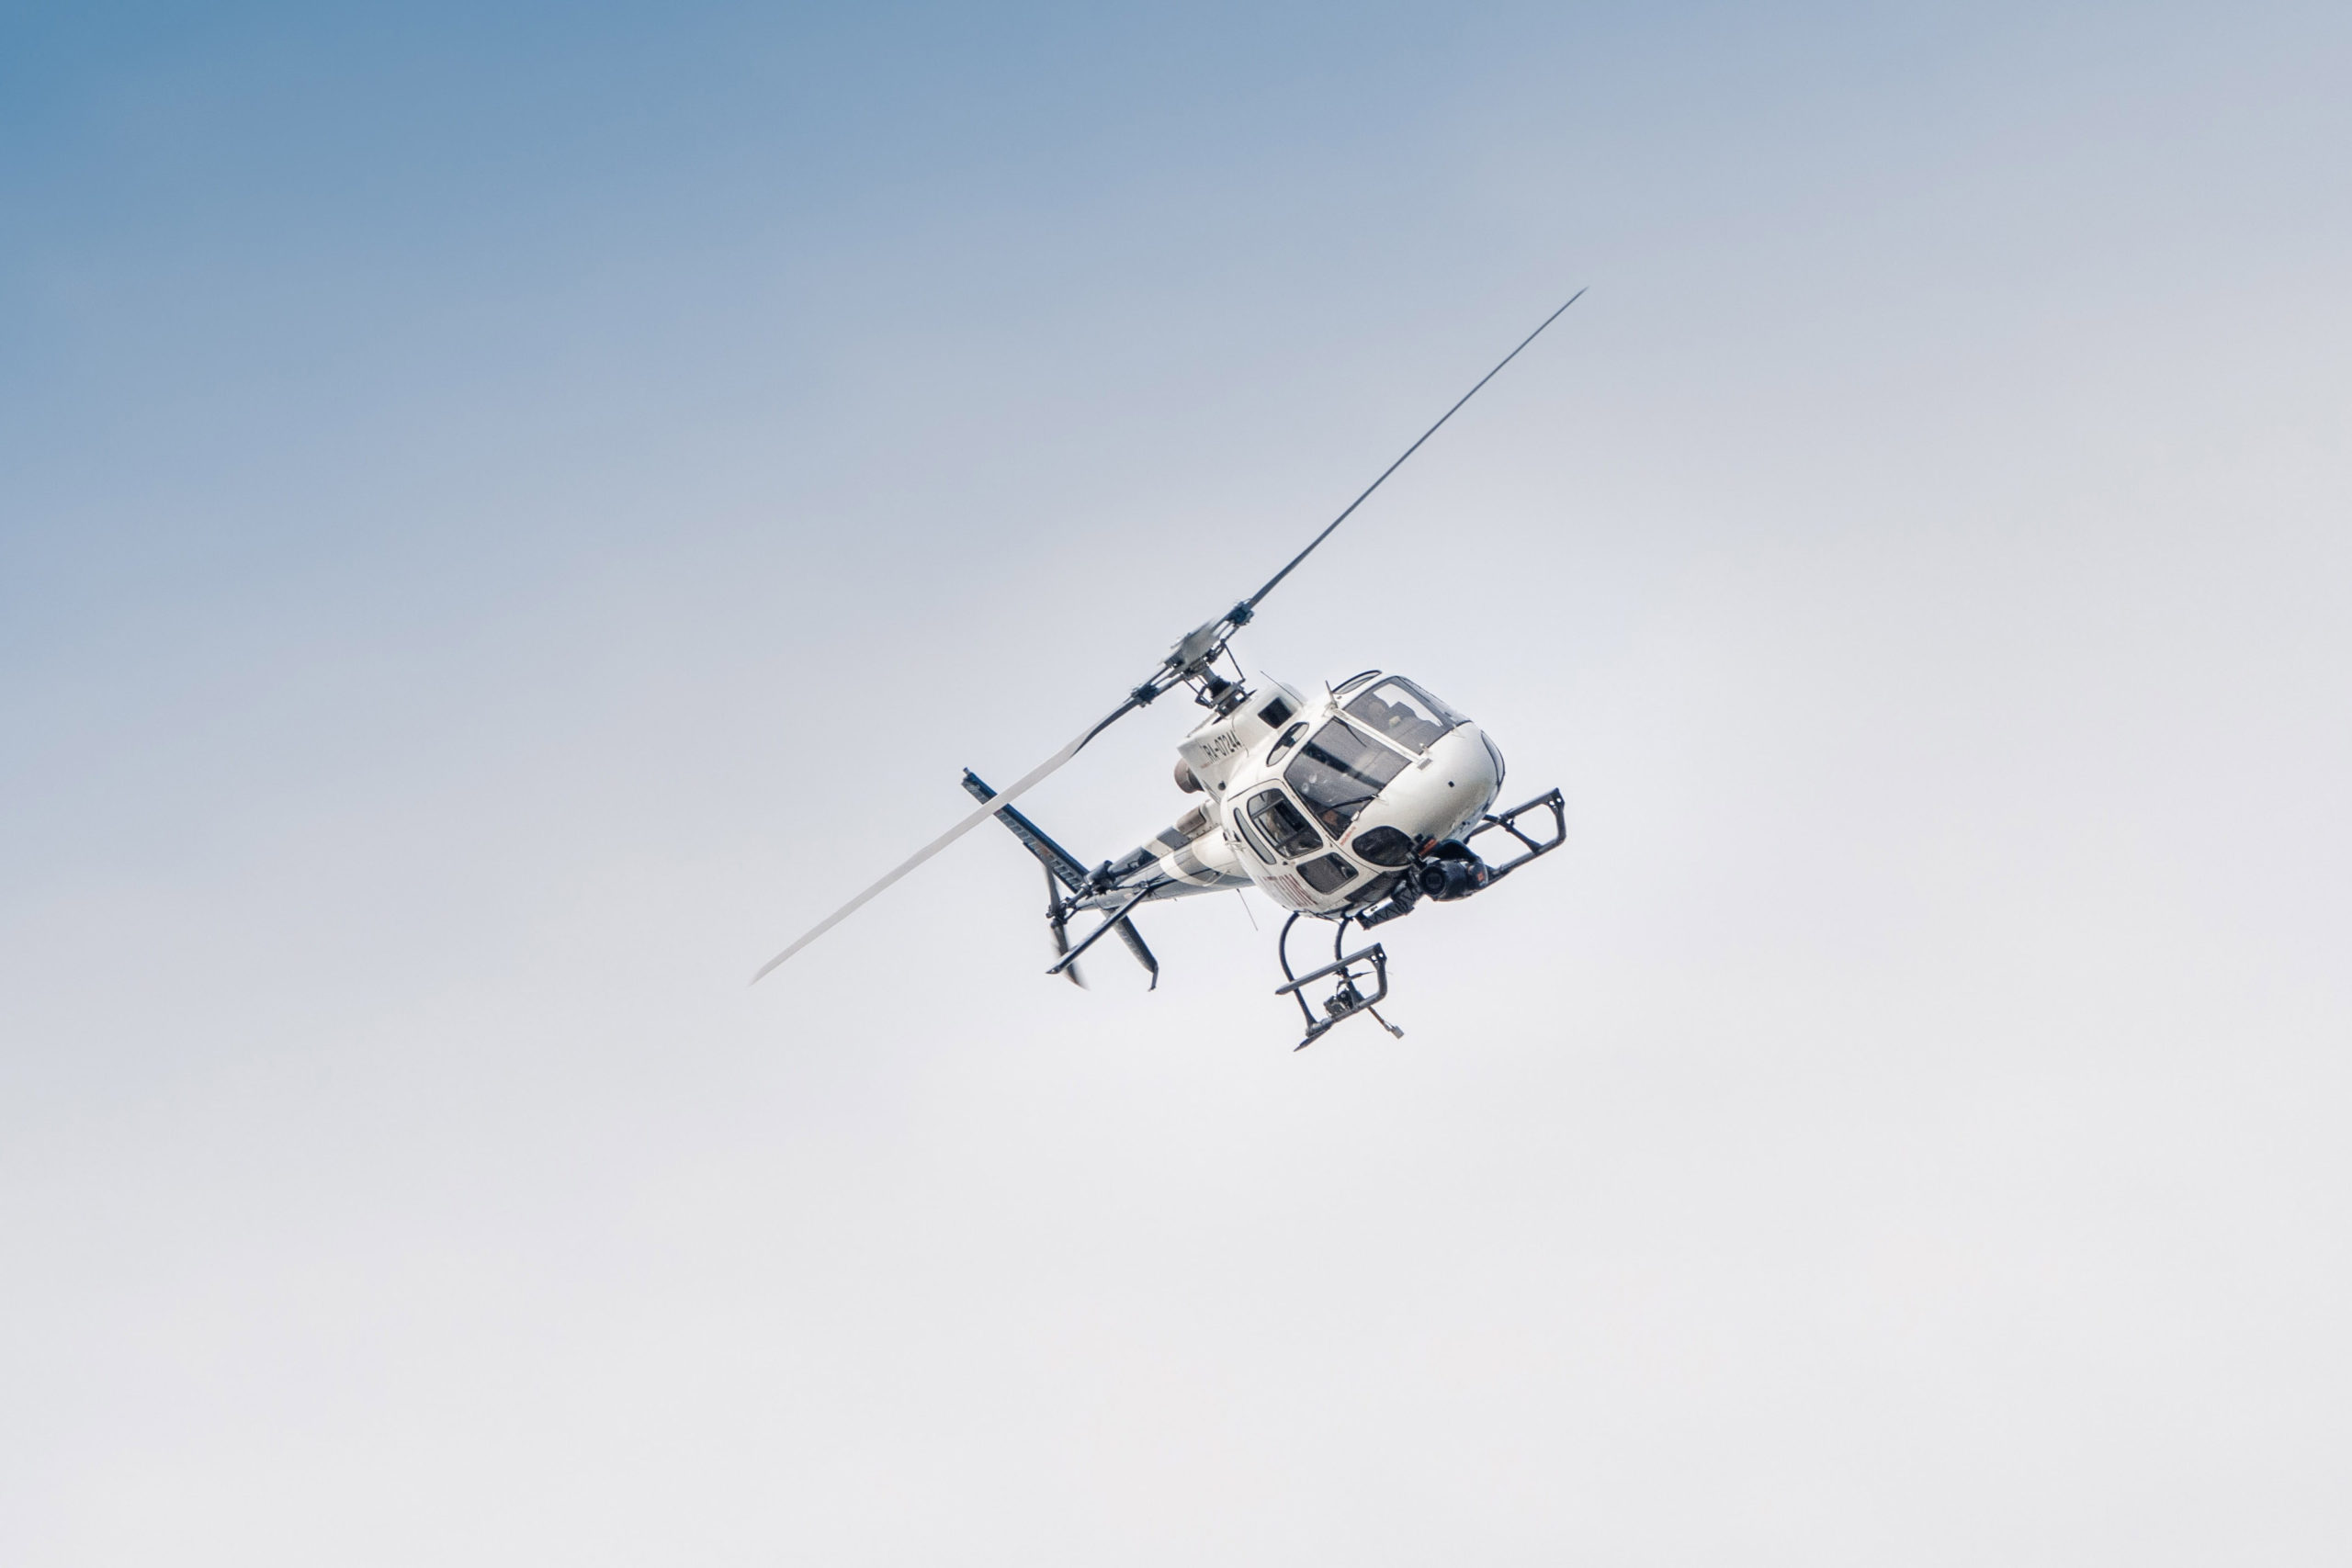 Helicopter-St-Jean-Cap-Ferrat-2-scaled.jpg